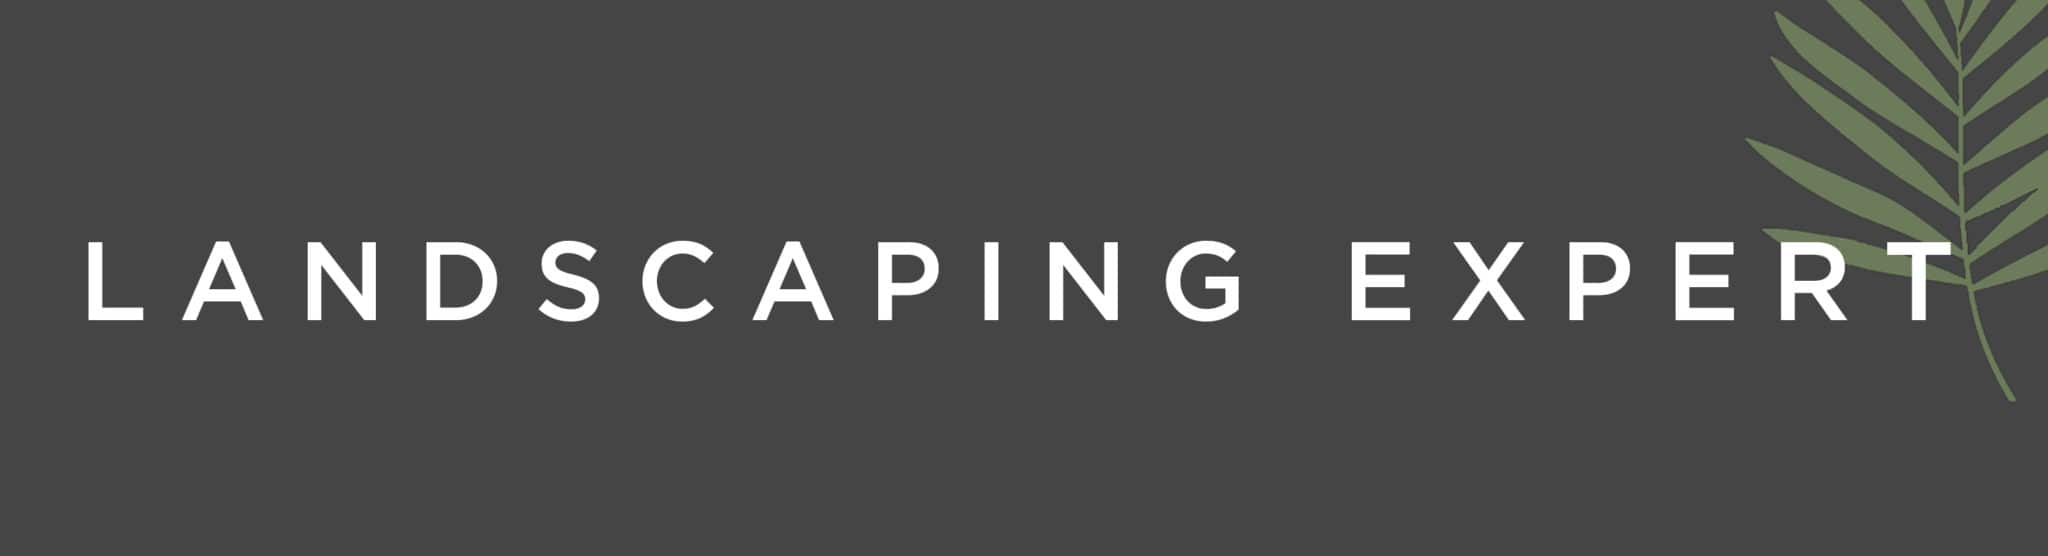 Landscaping Expert Logo